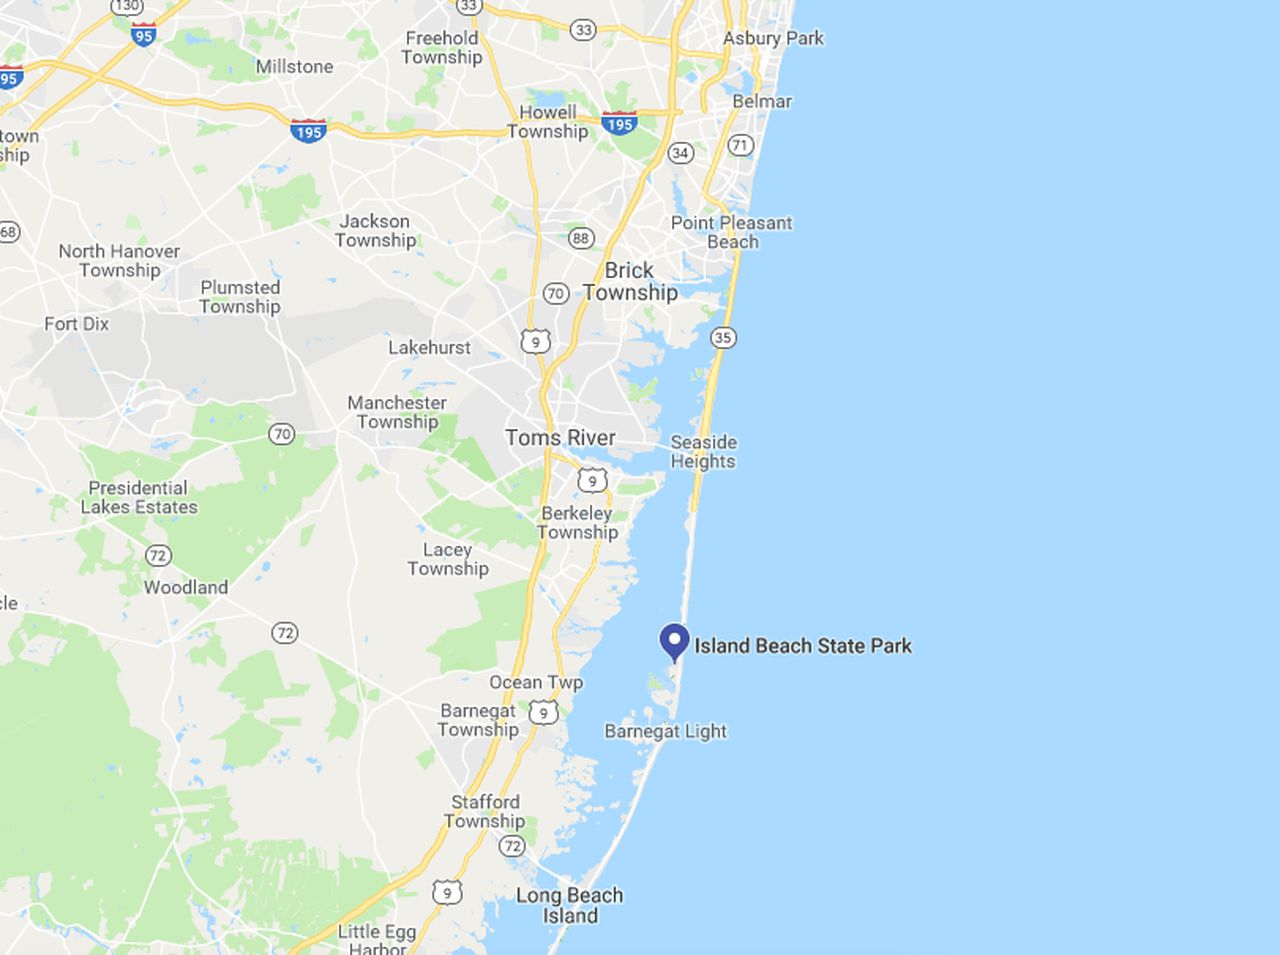 Map of New Jersey highlighting popular beach towns along the Jersey Shore